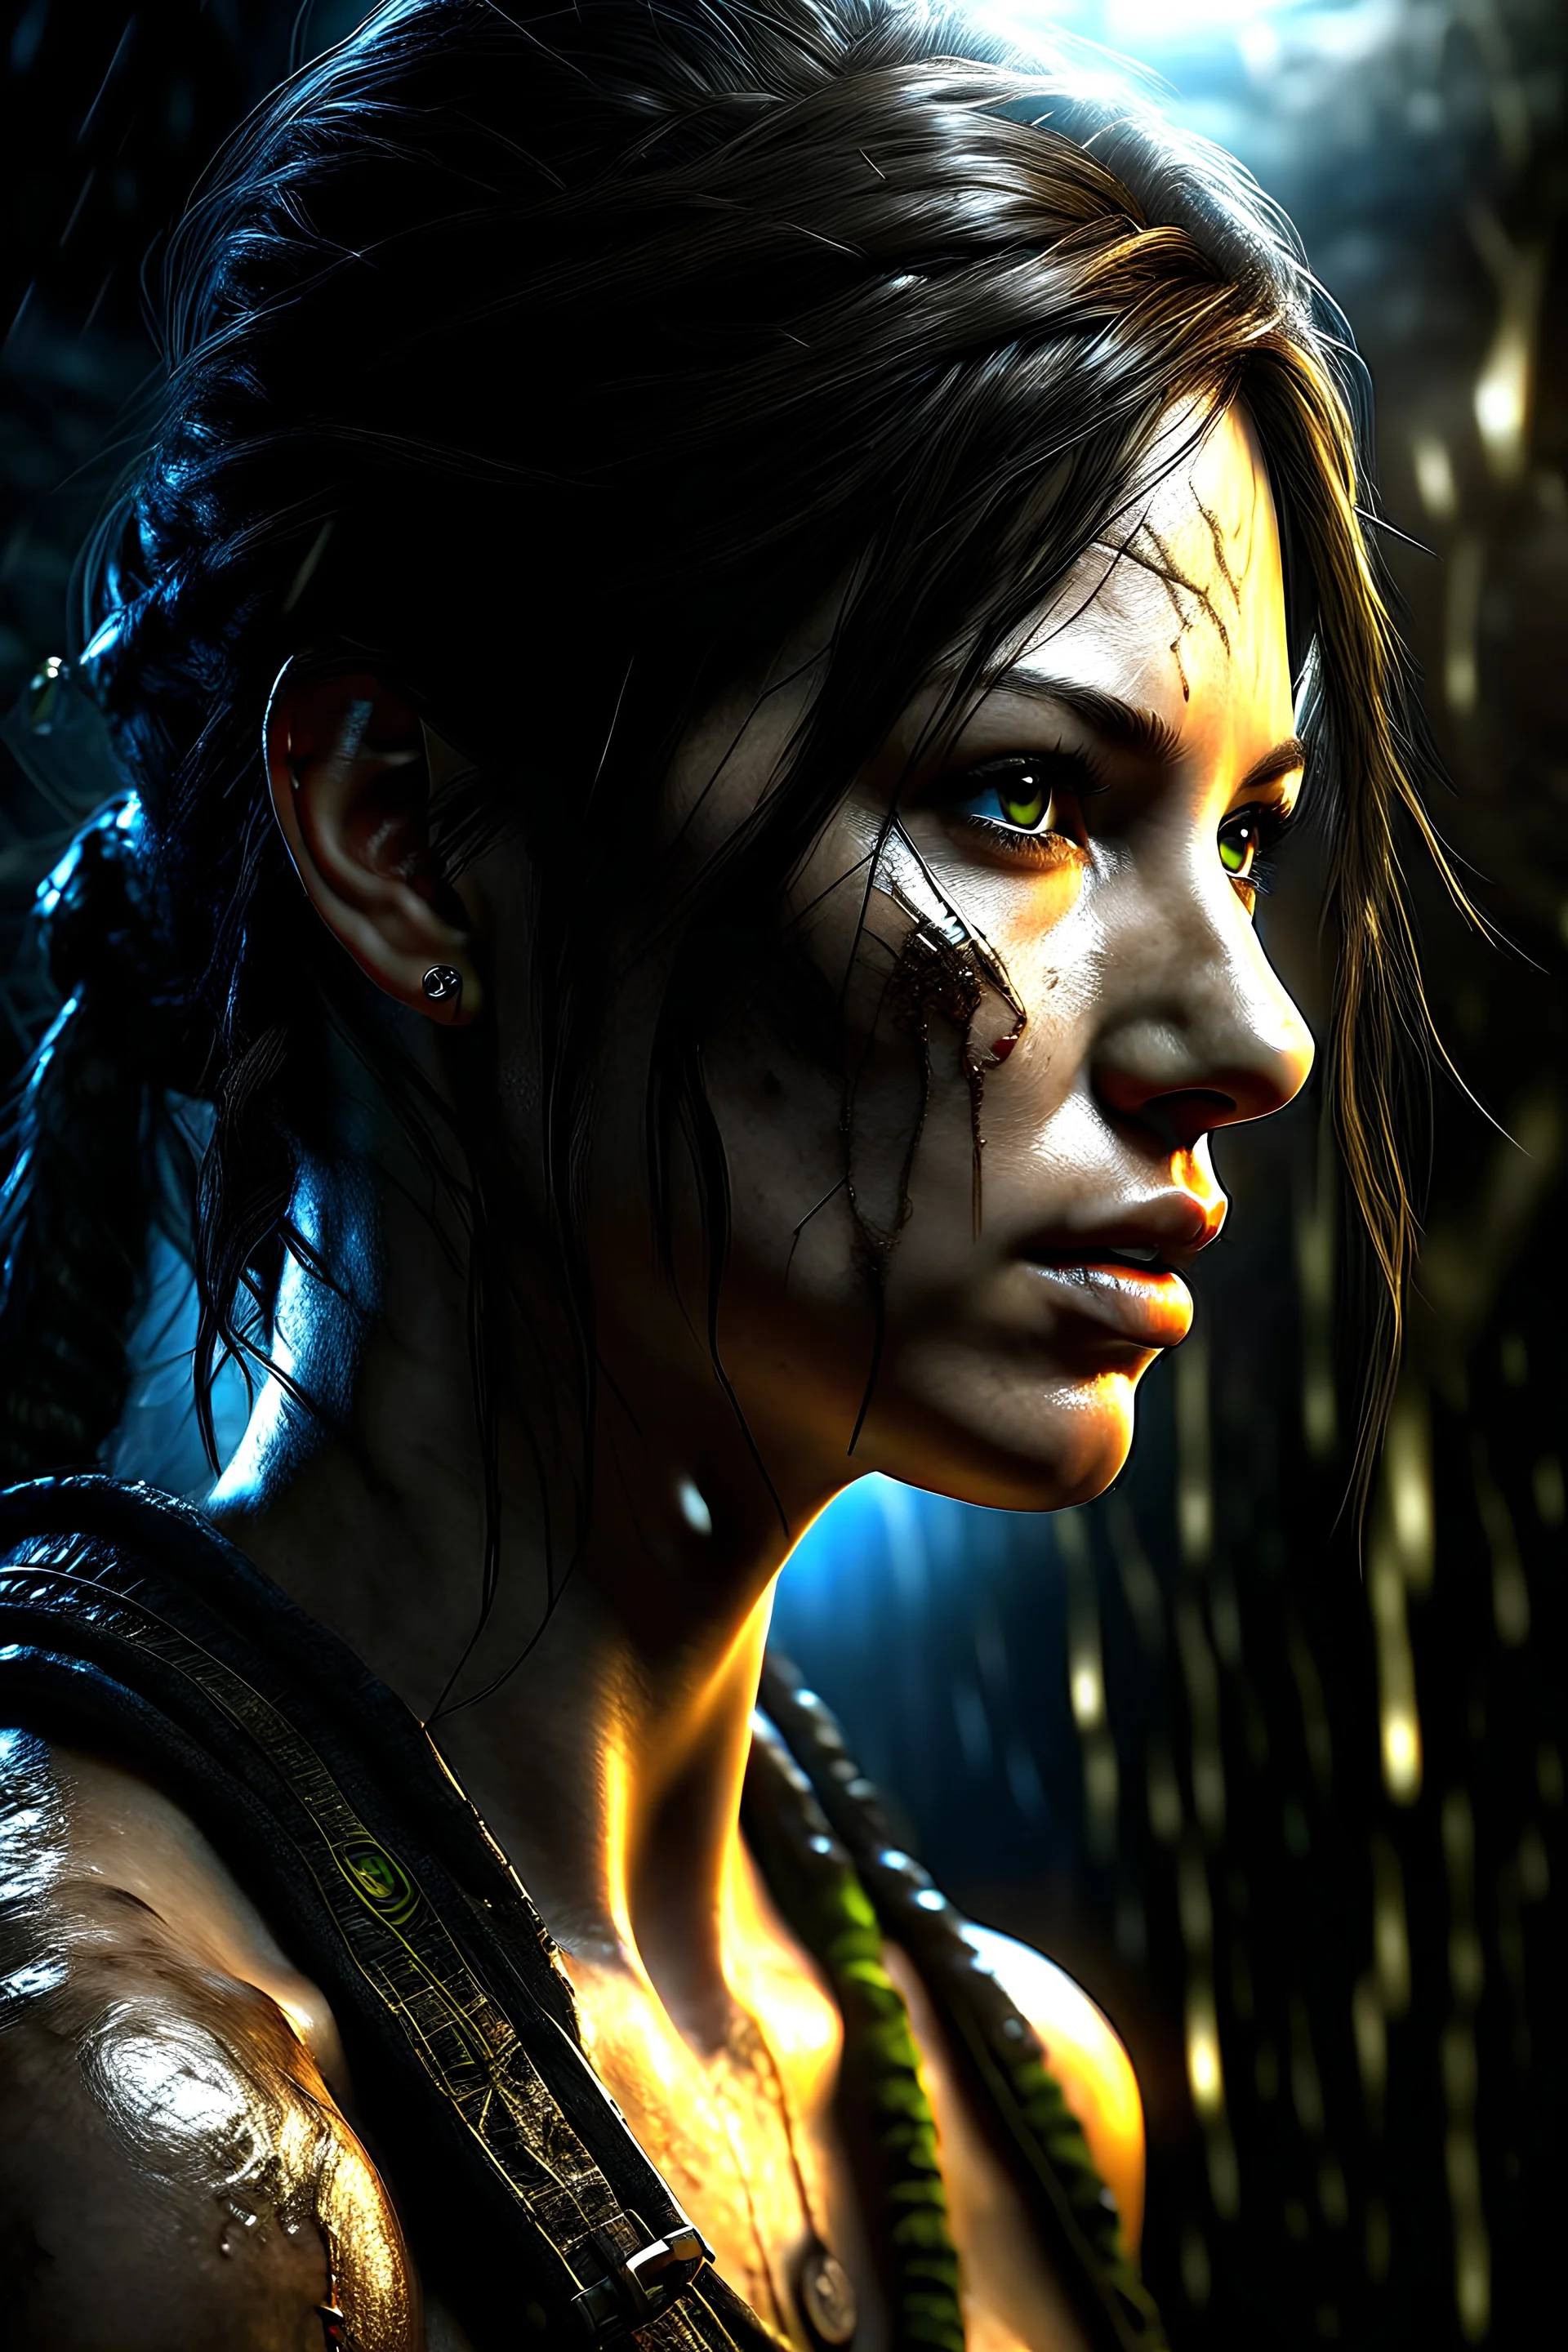 full digital image of Lara Croft. trending on artstation, greg rutkowski very coherent symmetrical artwork. cinematic, hyper realism, high detail, octane render, 8 k, iridescent accents